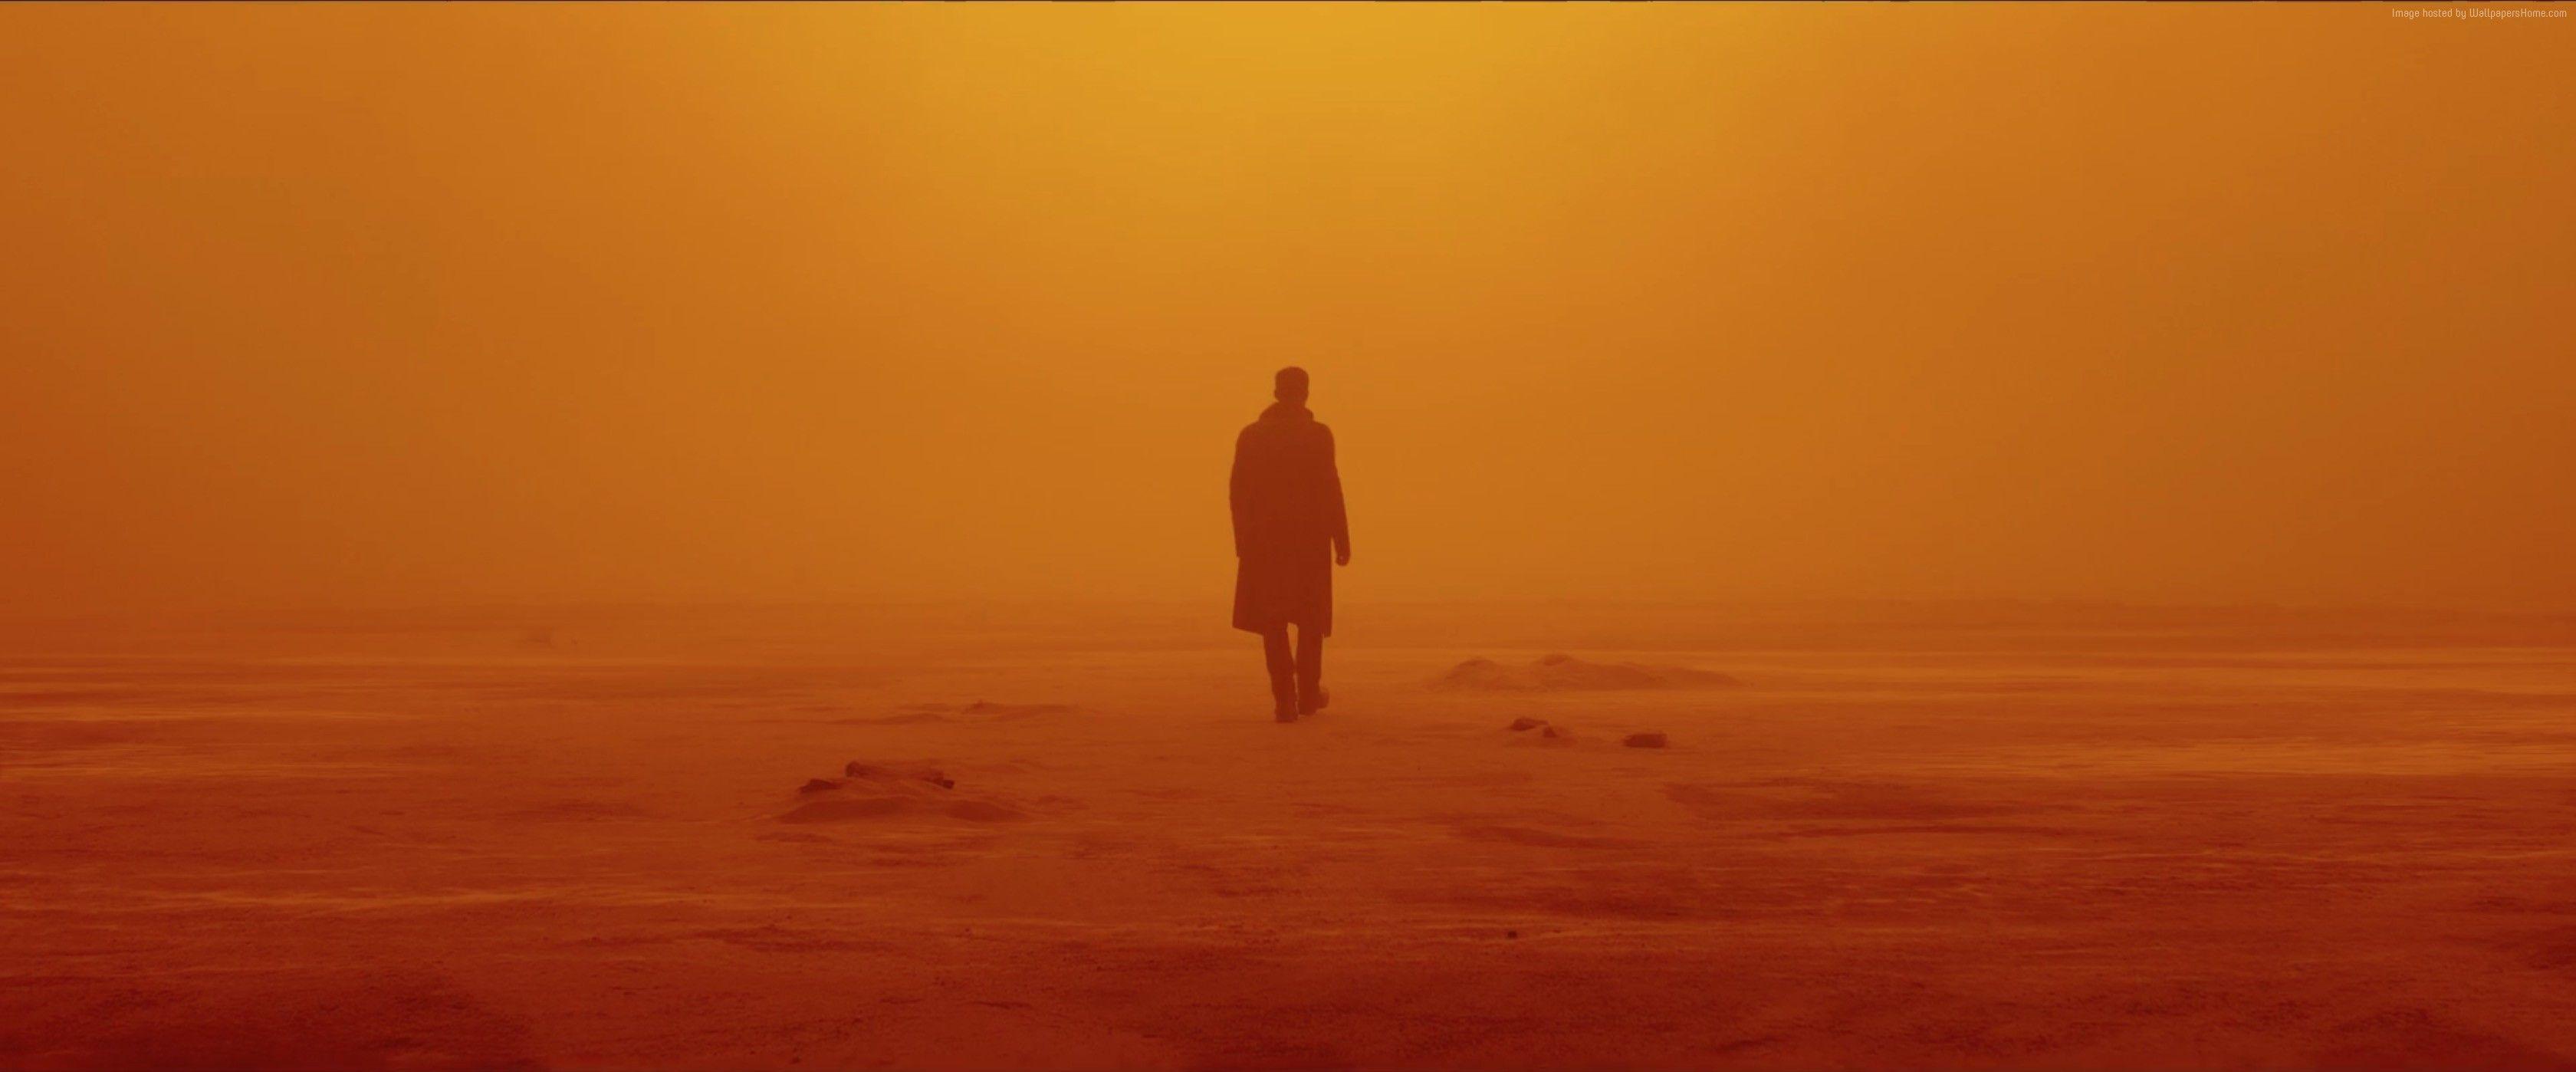 Wallpaper Blade Runner Ryan Gosling, best movies, Movies